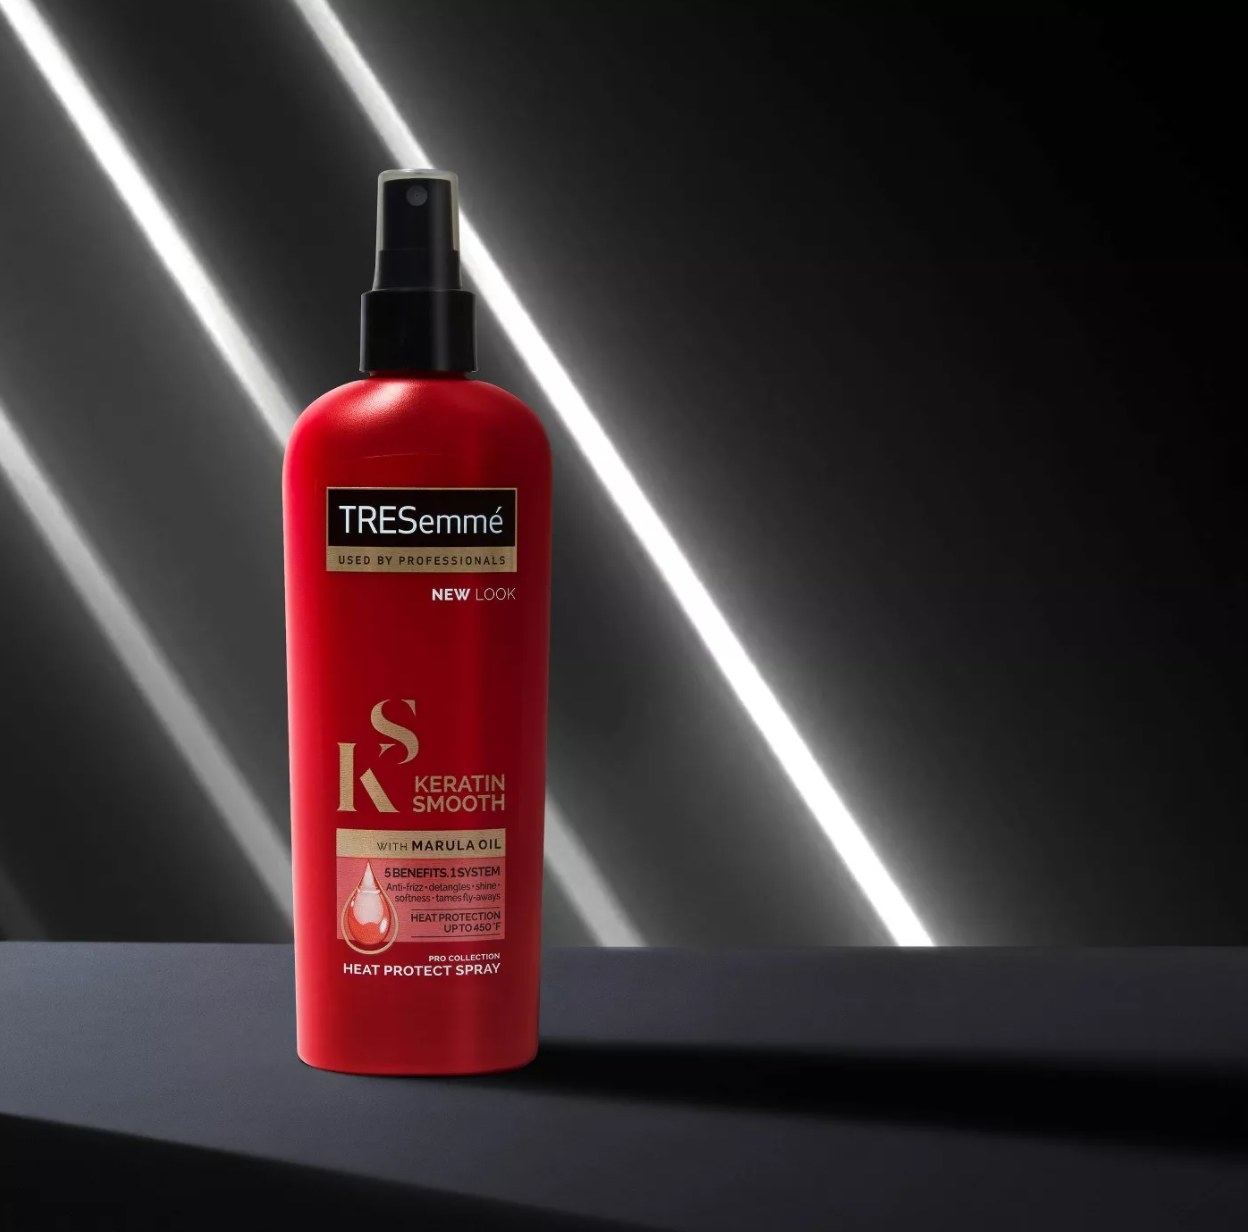 Red bottle of Tresemme heat styler against grey-black background